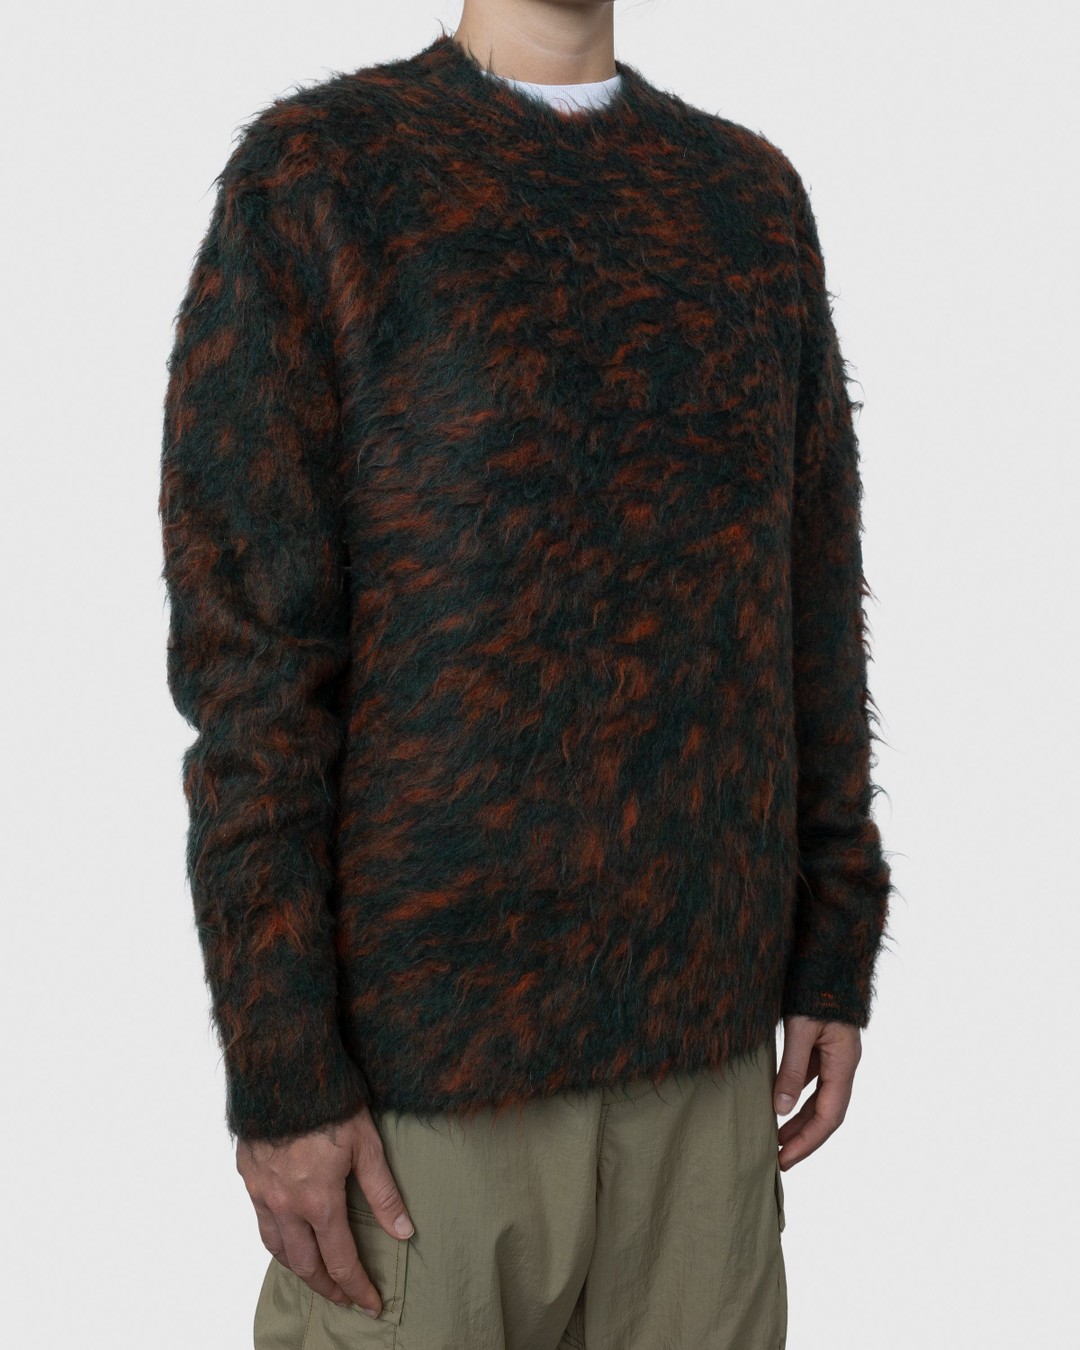 Acne Studios – Hairy Crewneck Sweater Green - Knitwear - Green - Image 4